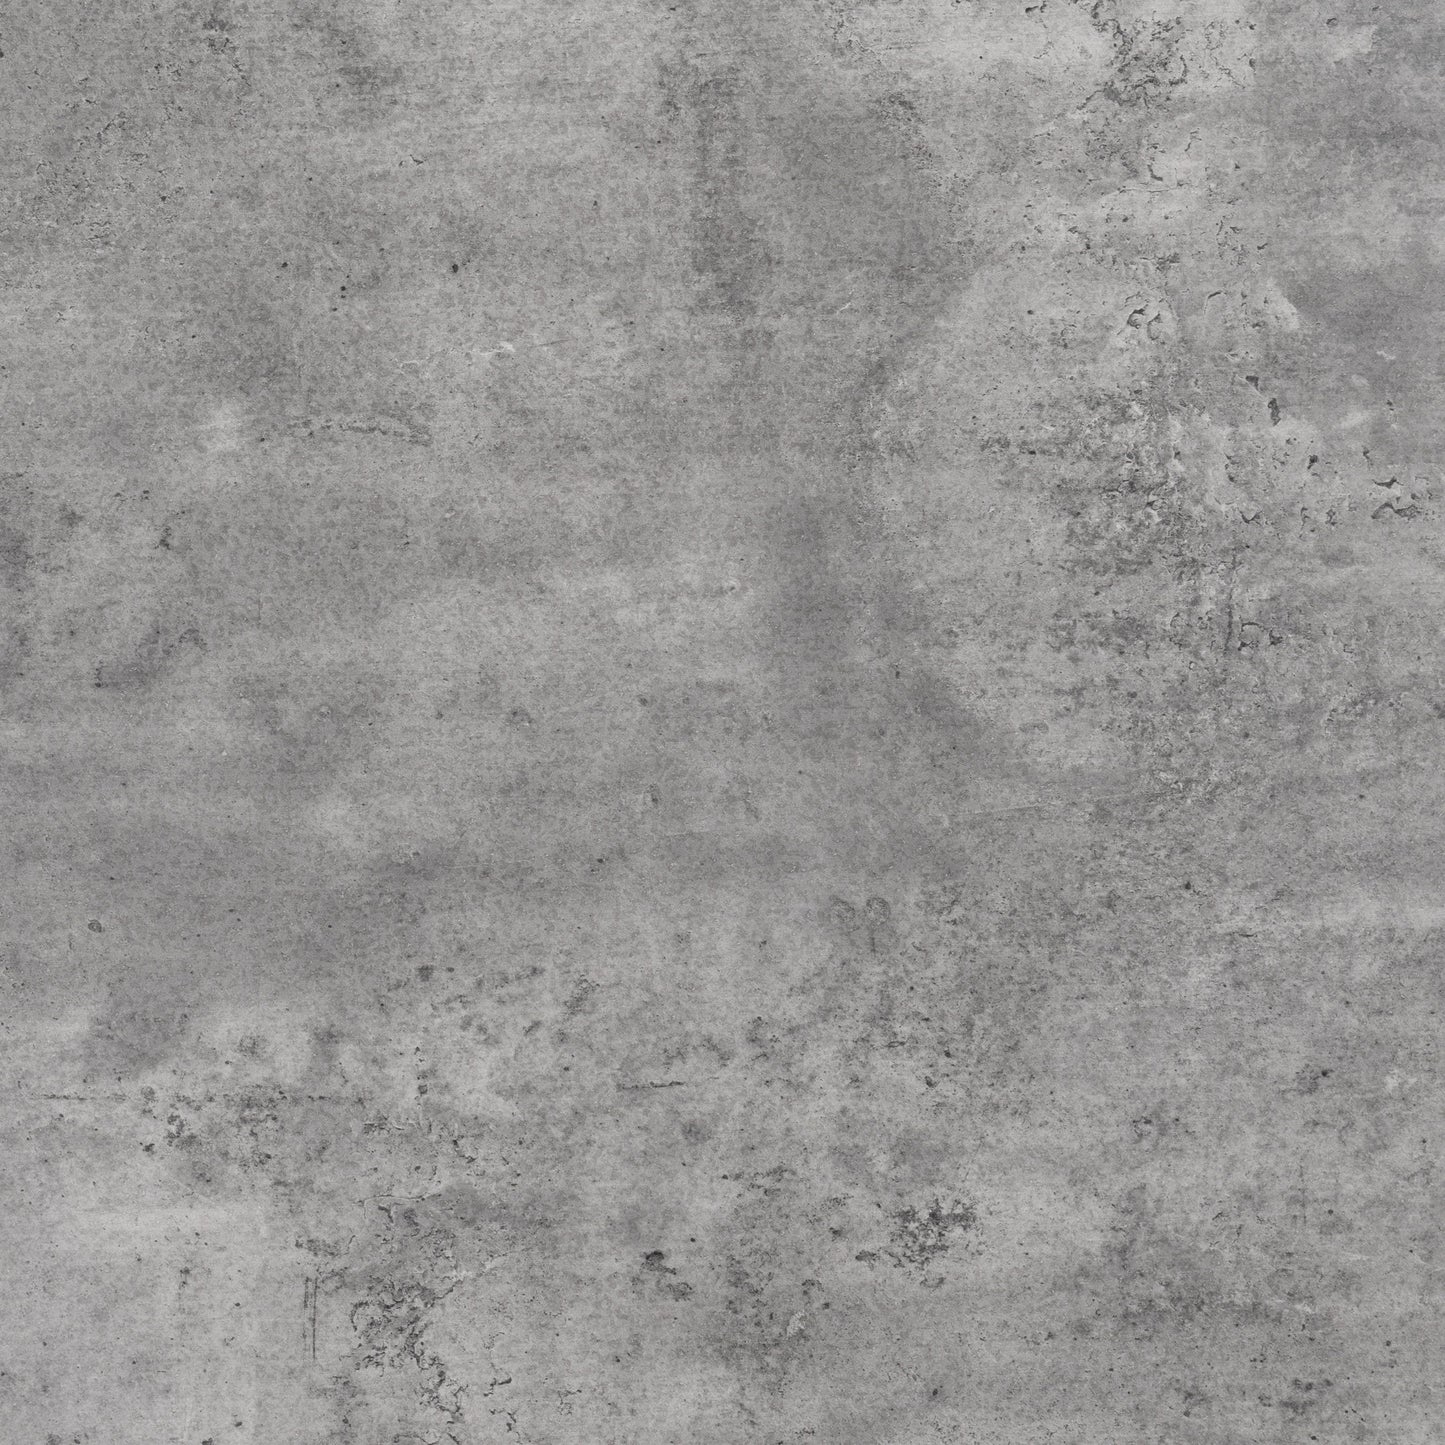 Close up of gray faux concrete top